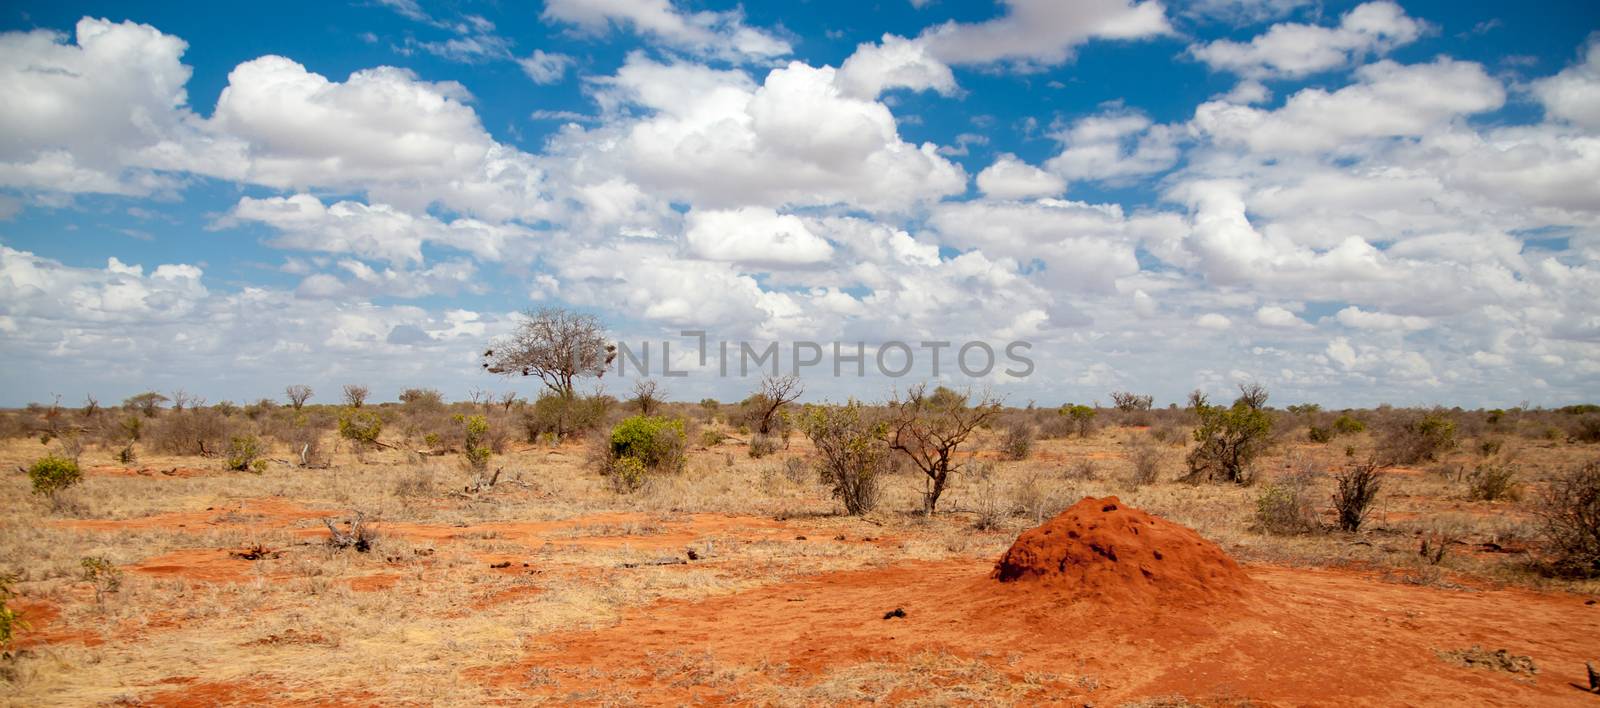 Scenery of Kenya, on safari through the savannah by 25ehaag6